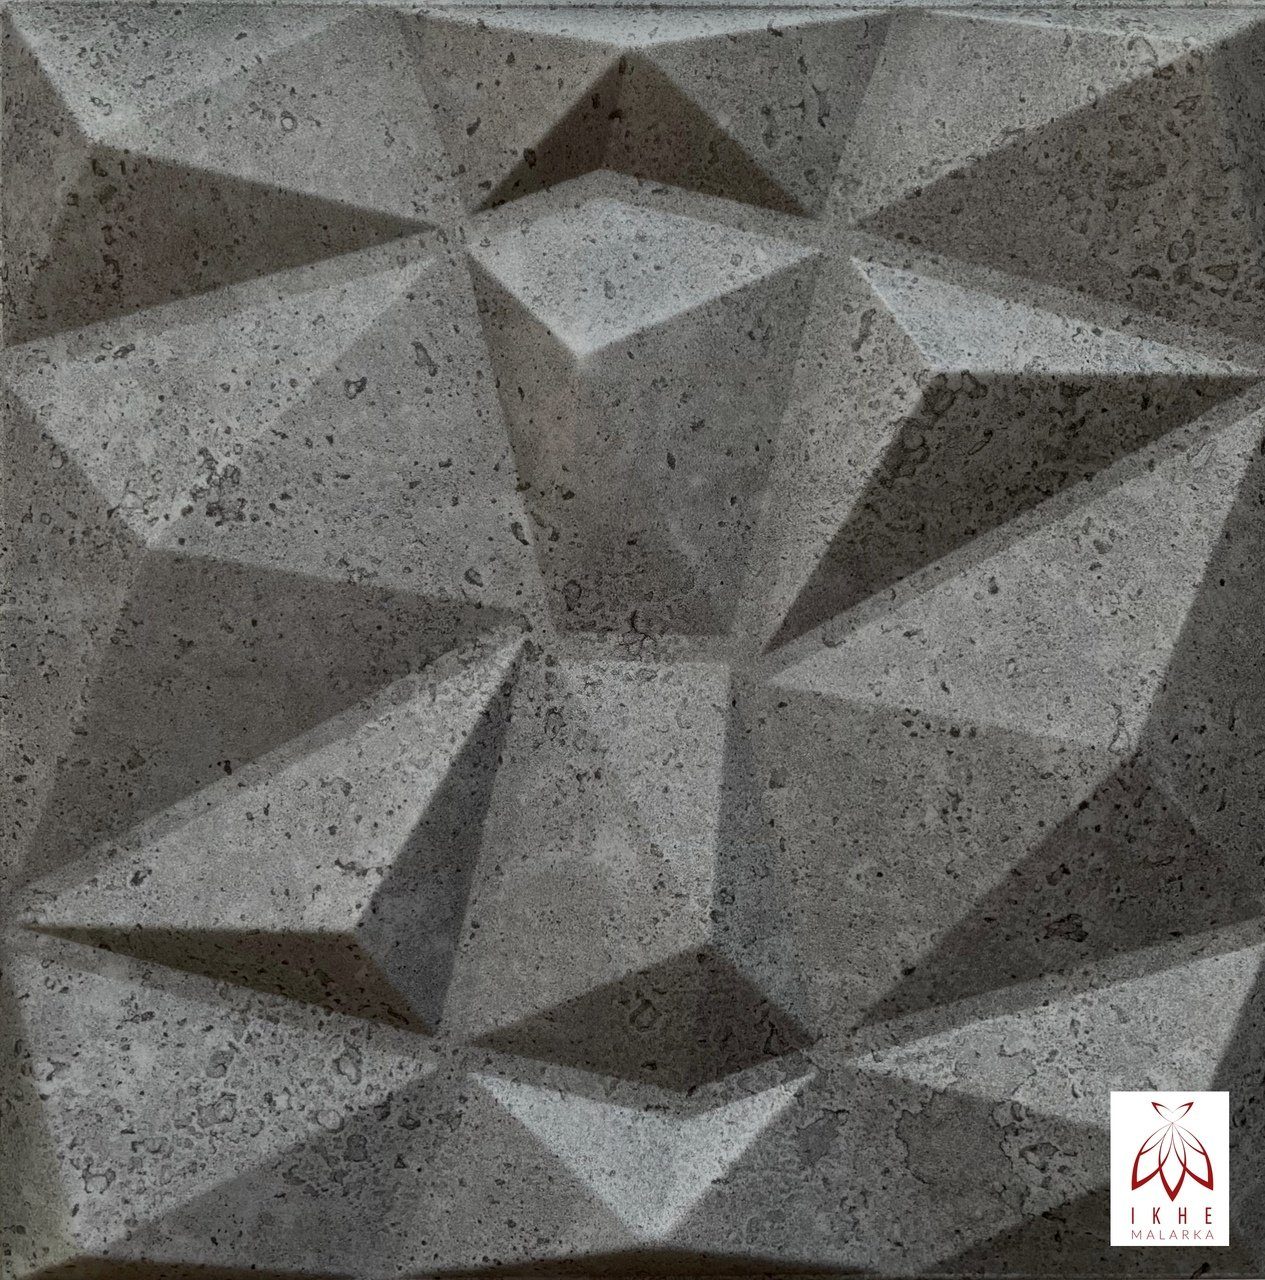 42 50,00x50,00 Betonlook, POLYSTYROL cm, 0,50 Diamant qm IKHEMalarka Wandpaneel Deckenpaneele 3D 4m²/16PCS Wandverkleidung BxL: